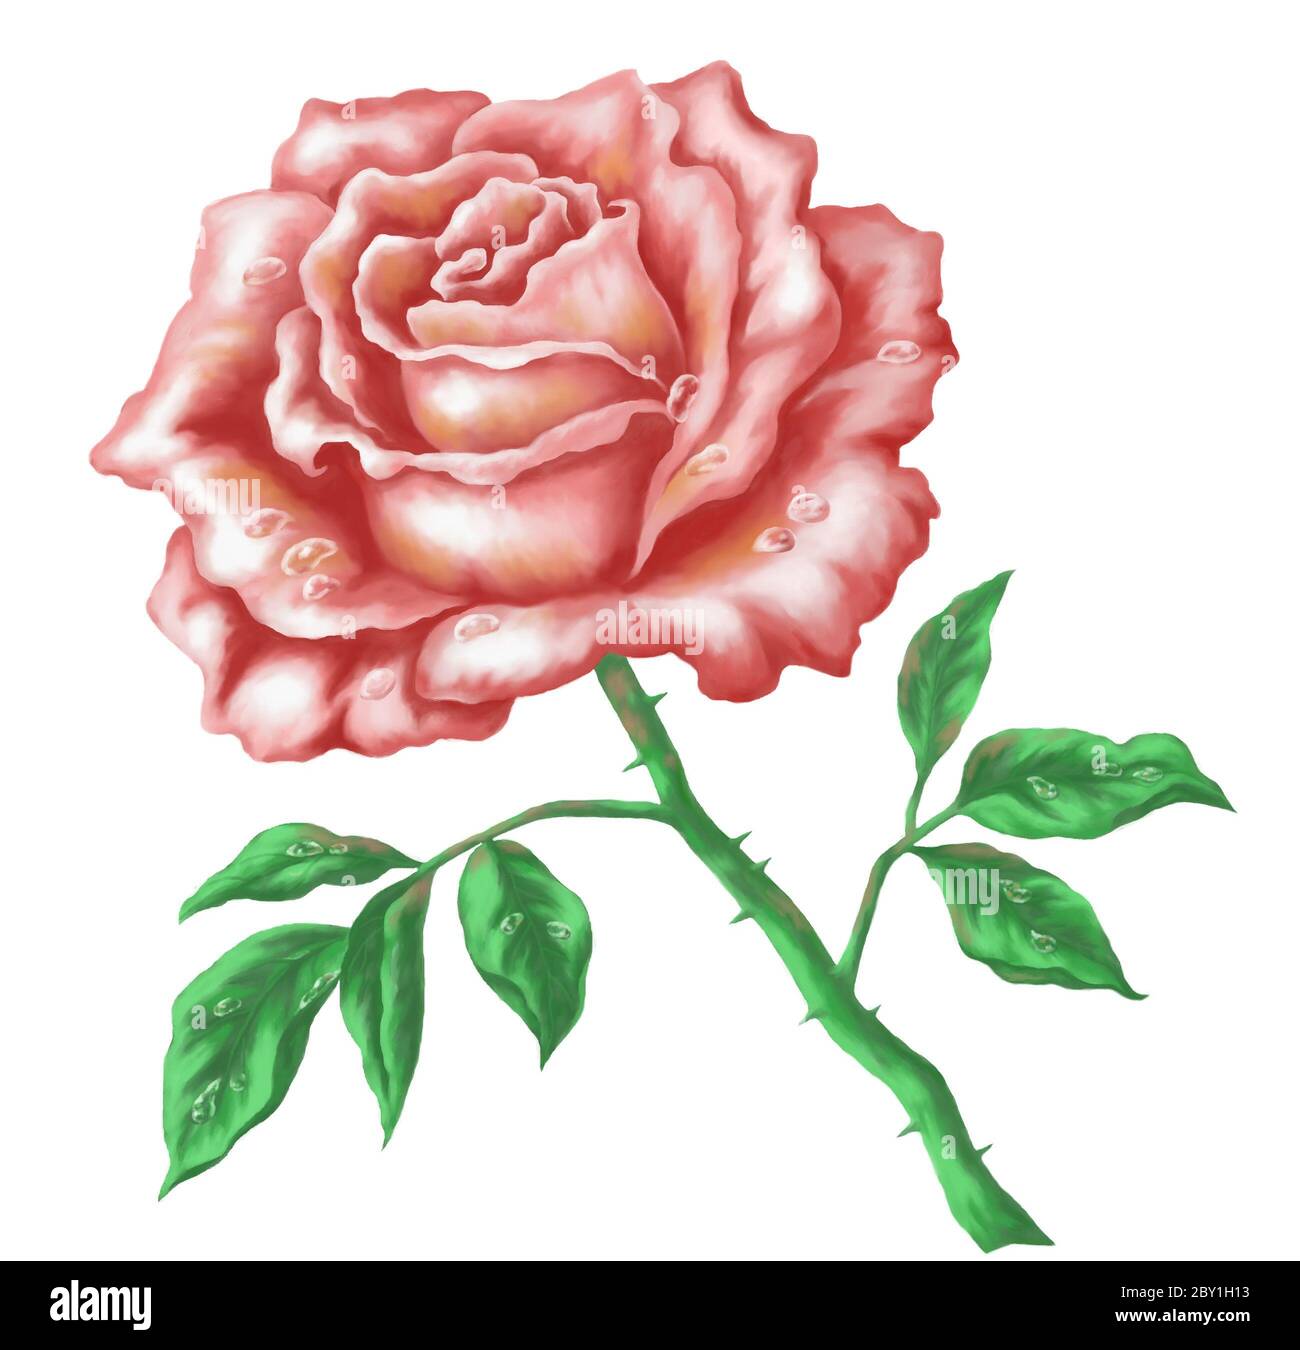 Flower rose, hand-draw painting Stock Photo - Alamy